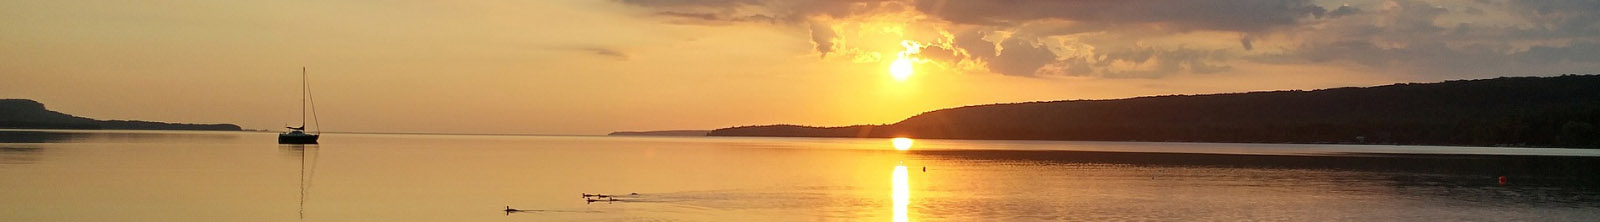 Sunset view of a shore on Lake Michigan